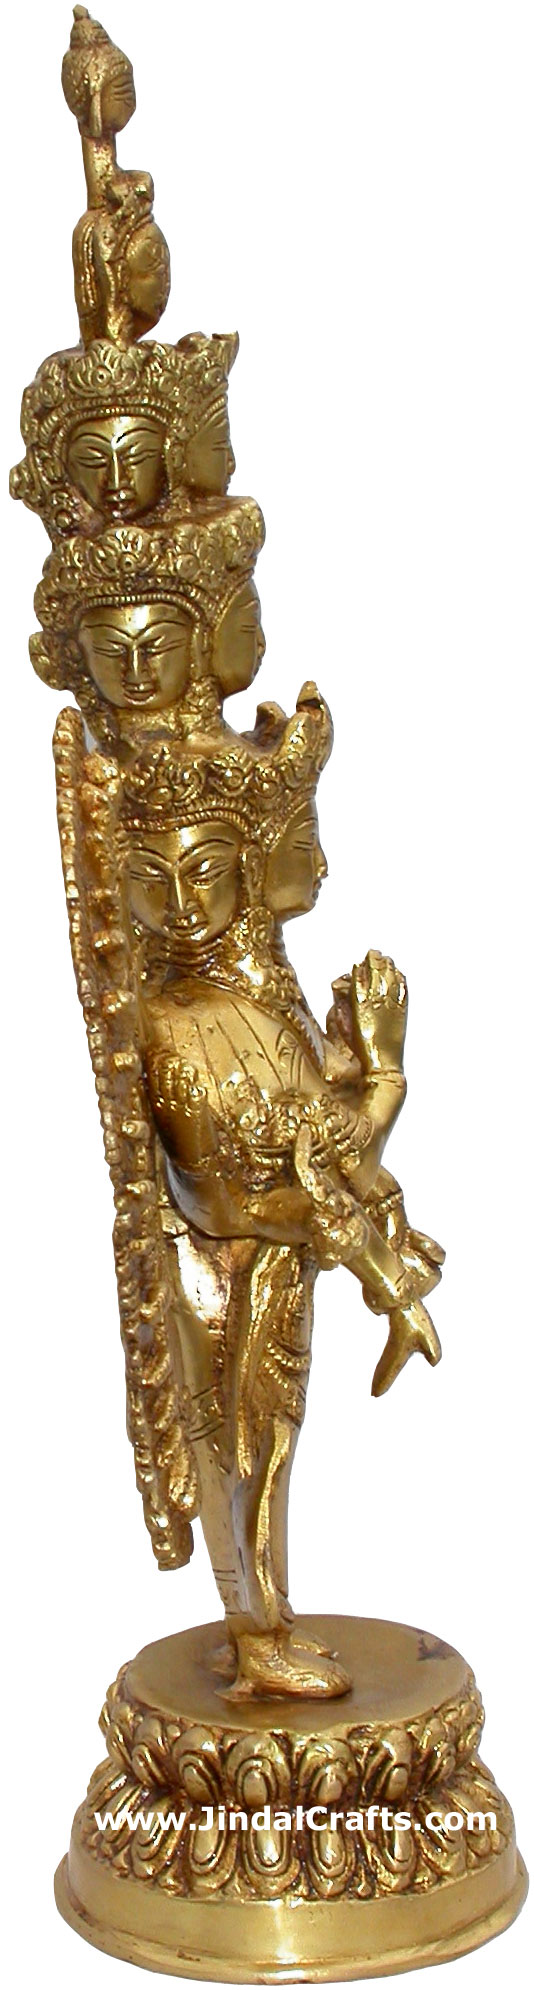 Tara with Thousands Hands Buddhism Statues Figures Art